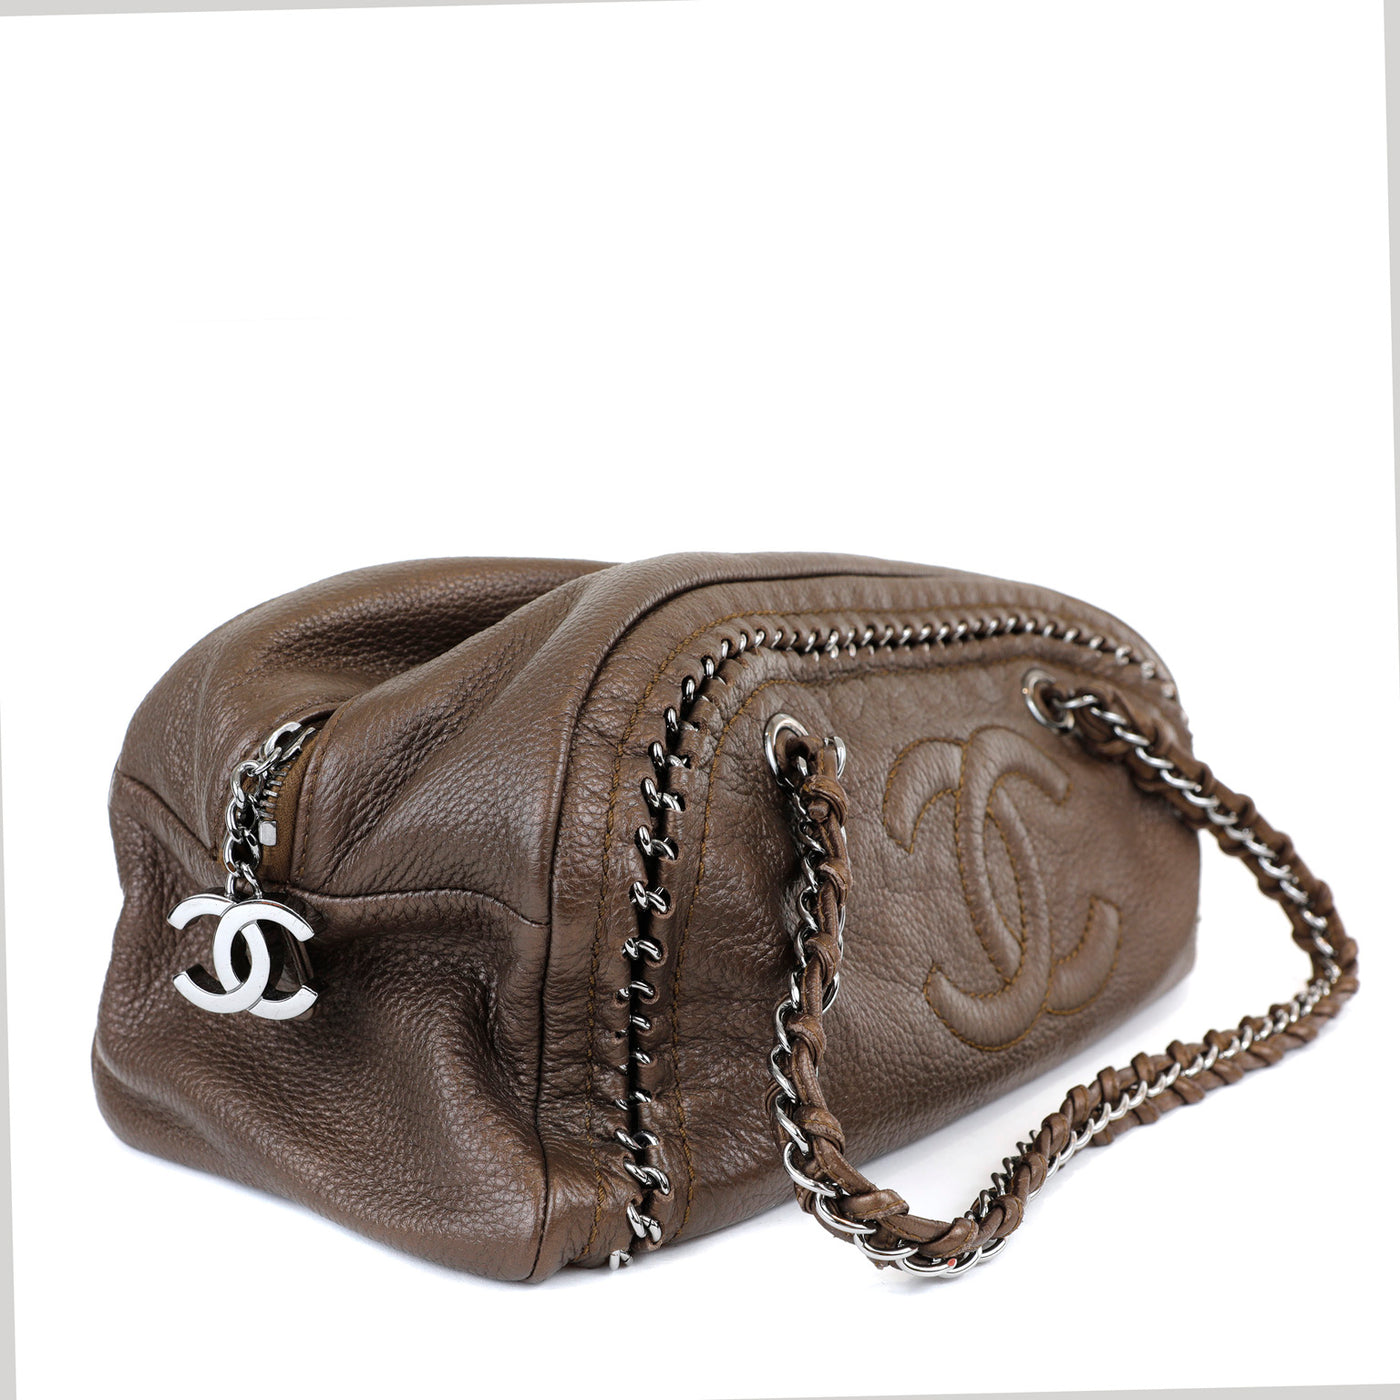 Chanel Metallic Brown CC Bowler Bag with Silver Hardware